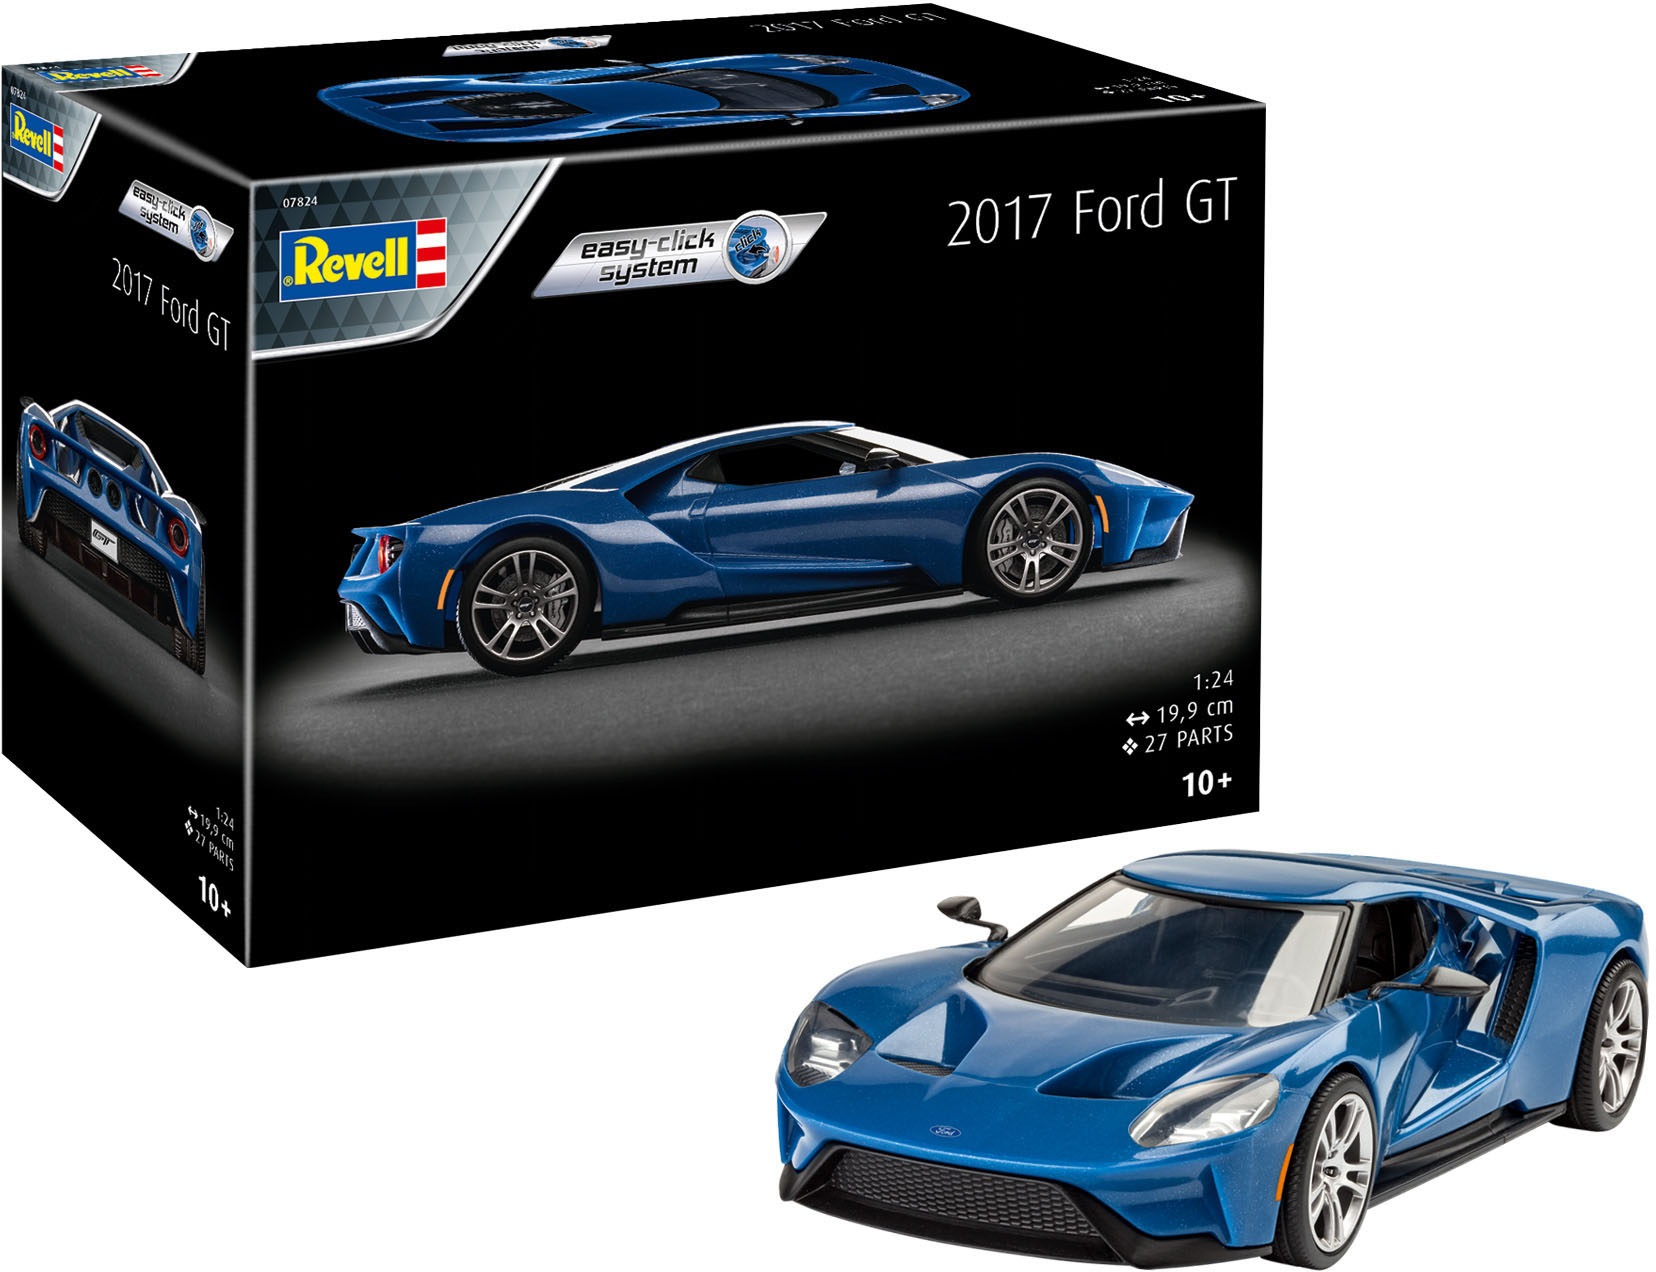 Modellbausatz »2017 Ford GT«, 1:24